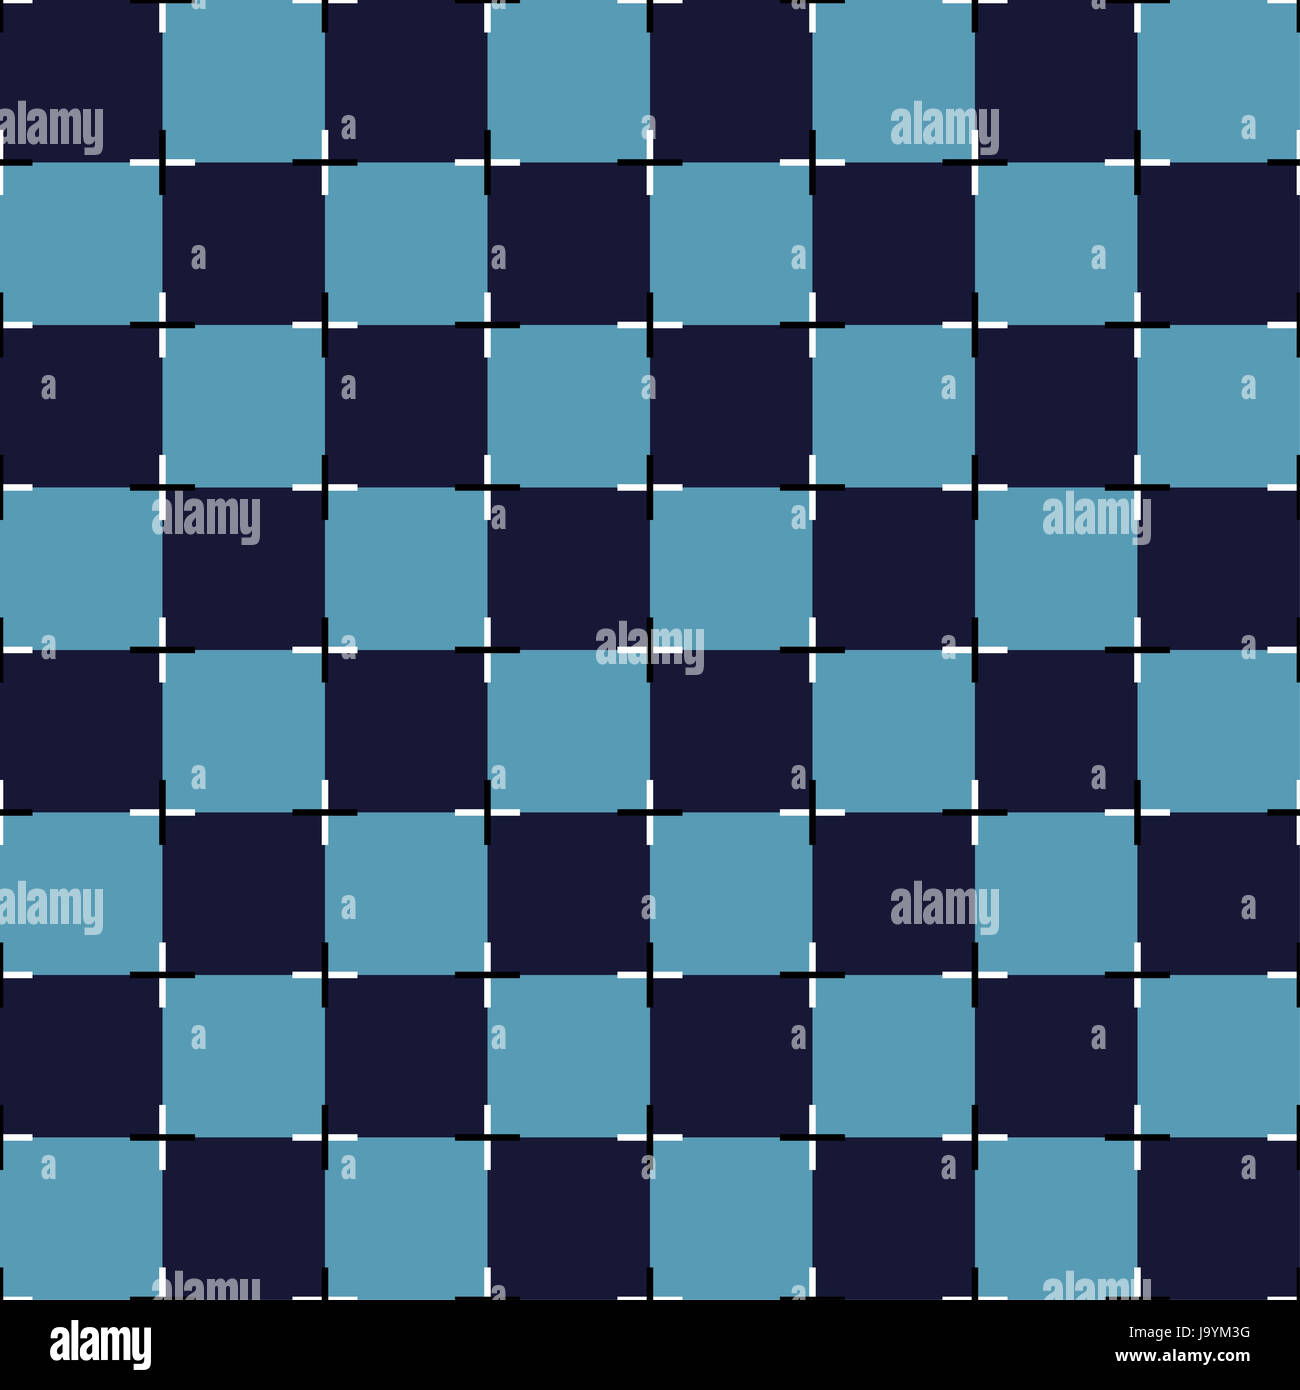 Bizarre Optical Illusion of Chess Board Baffles Internet